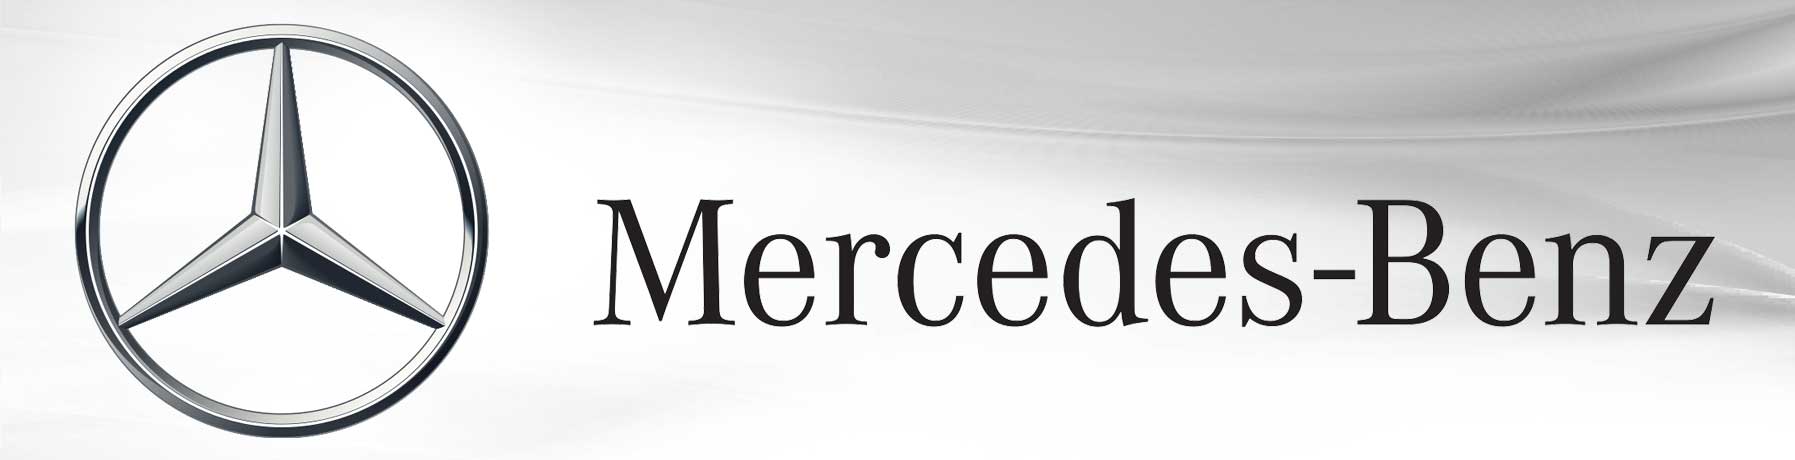 We service Mercedes Benz